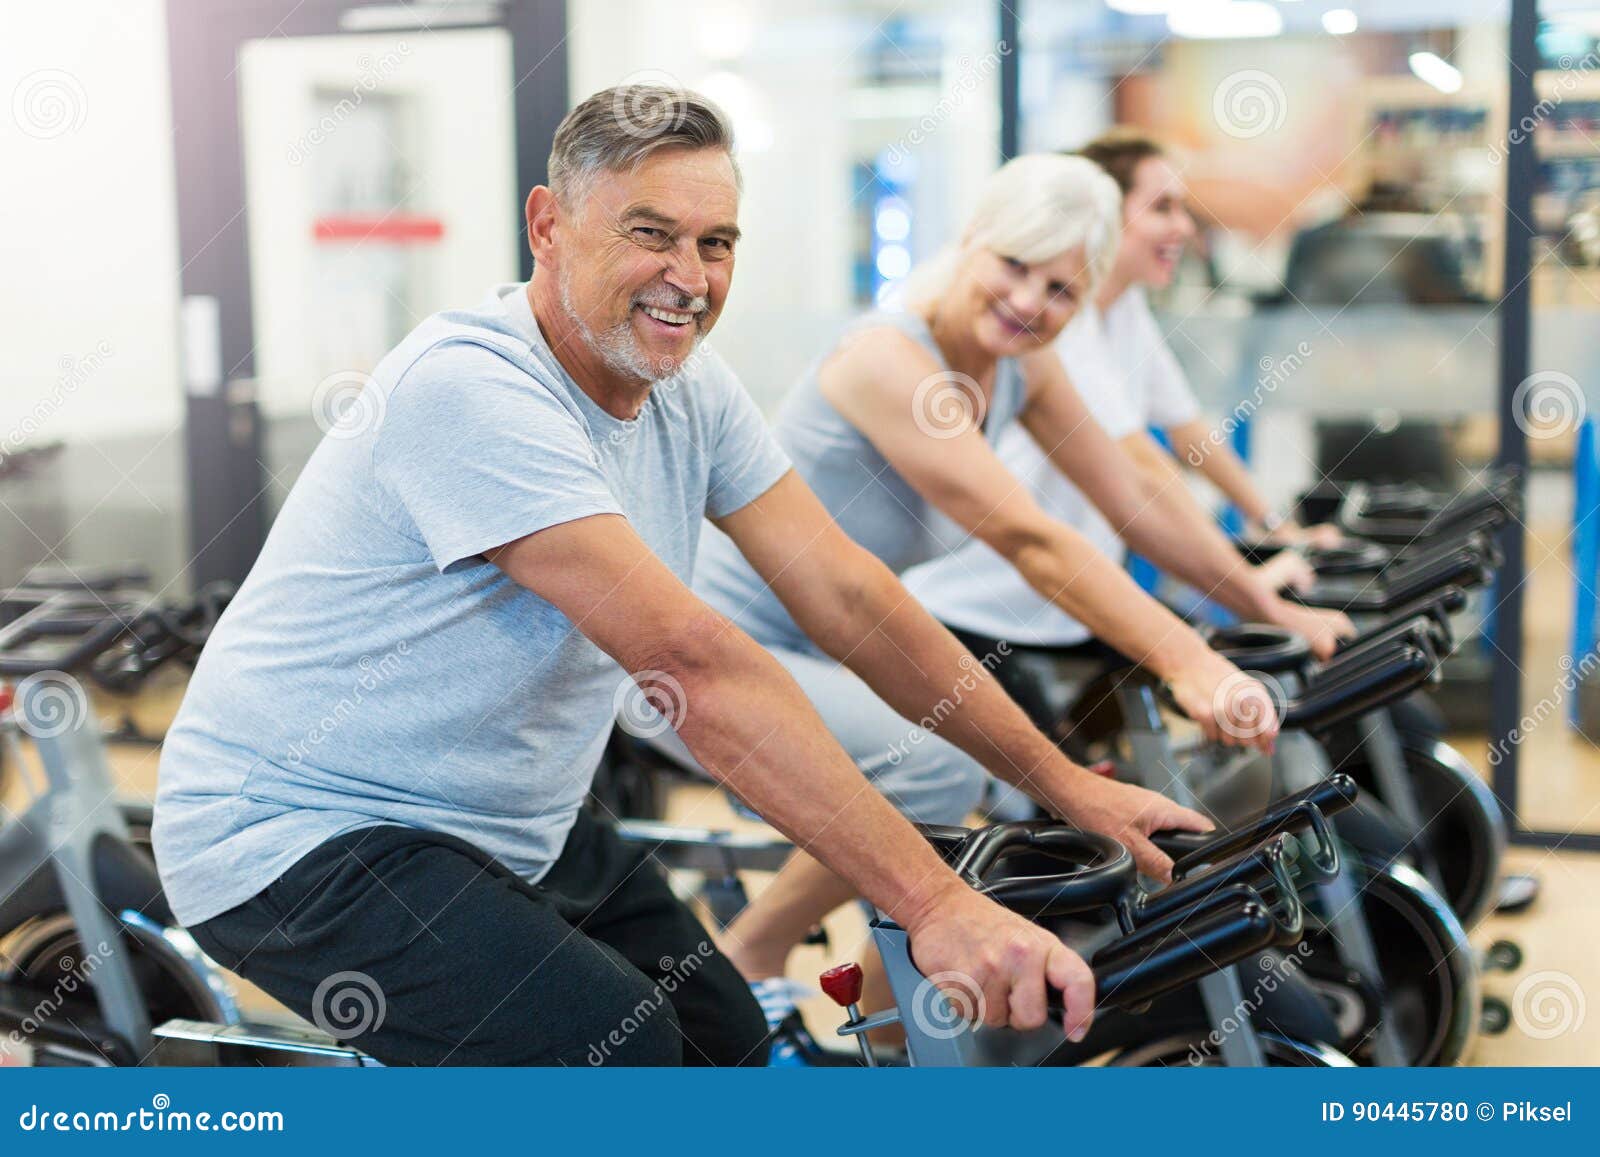 geriatric exercise bike